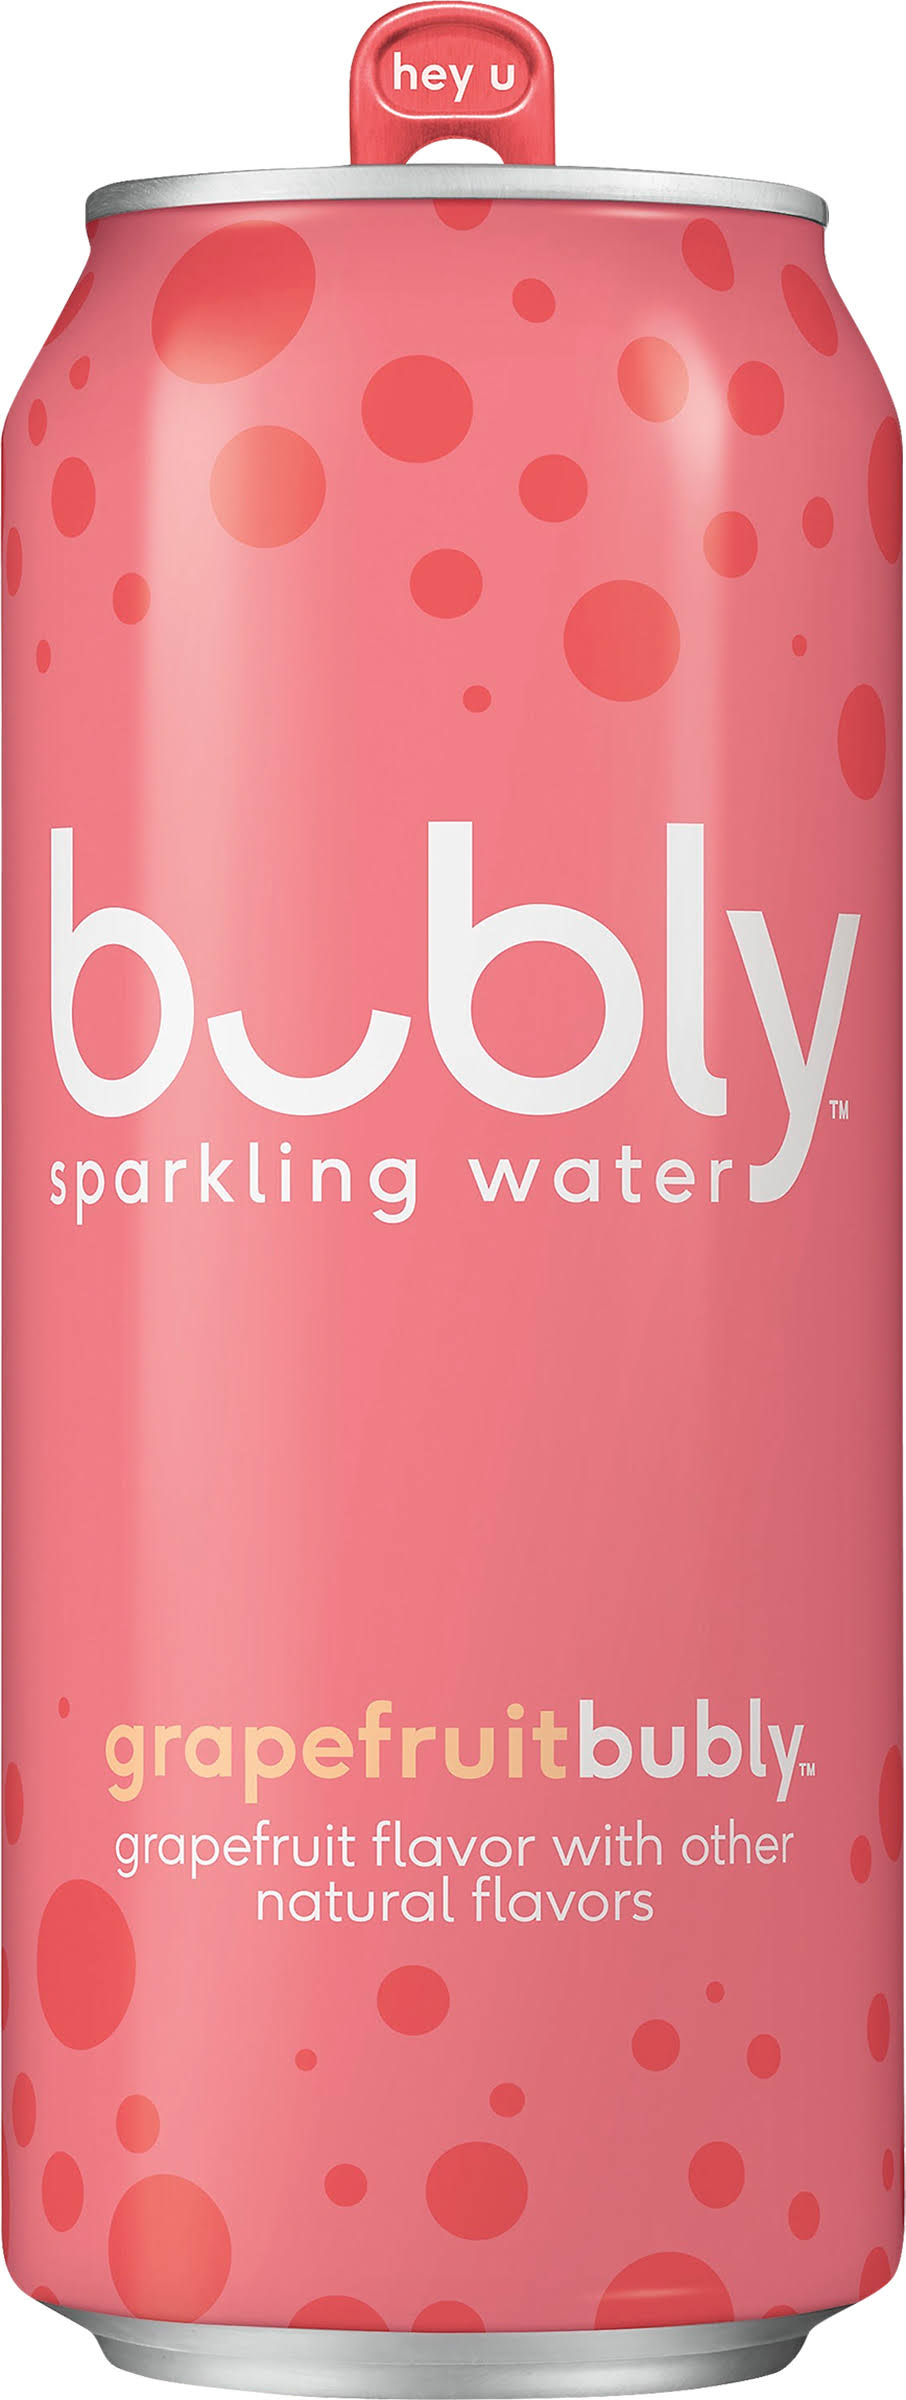 Bubly Sparkling Water, Grapefruit - 16 fl oz